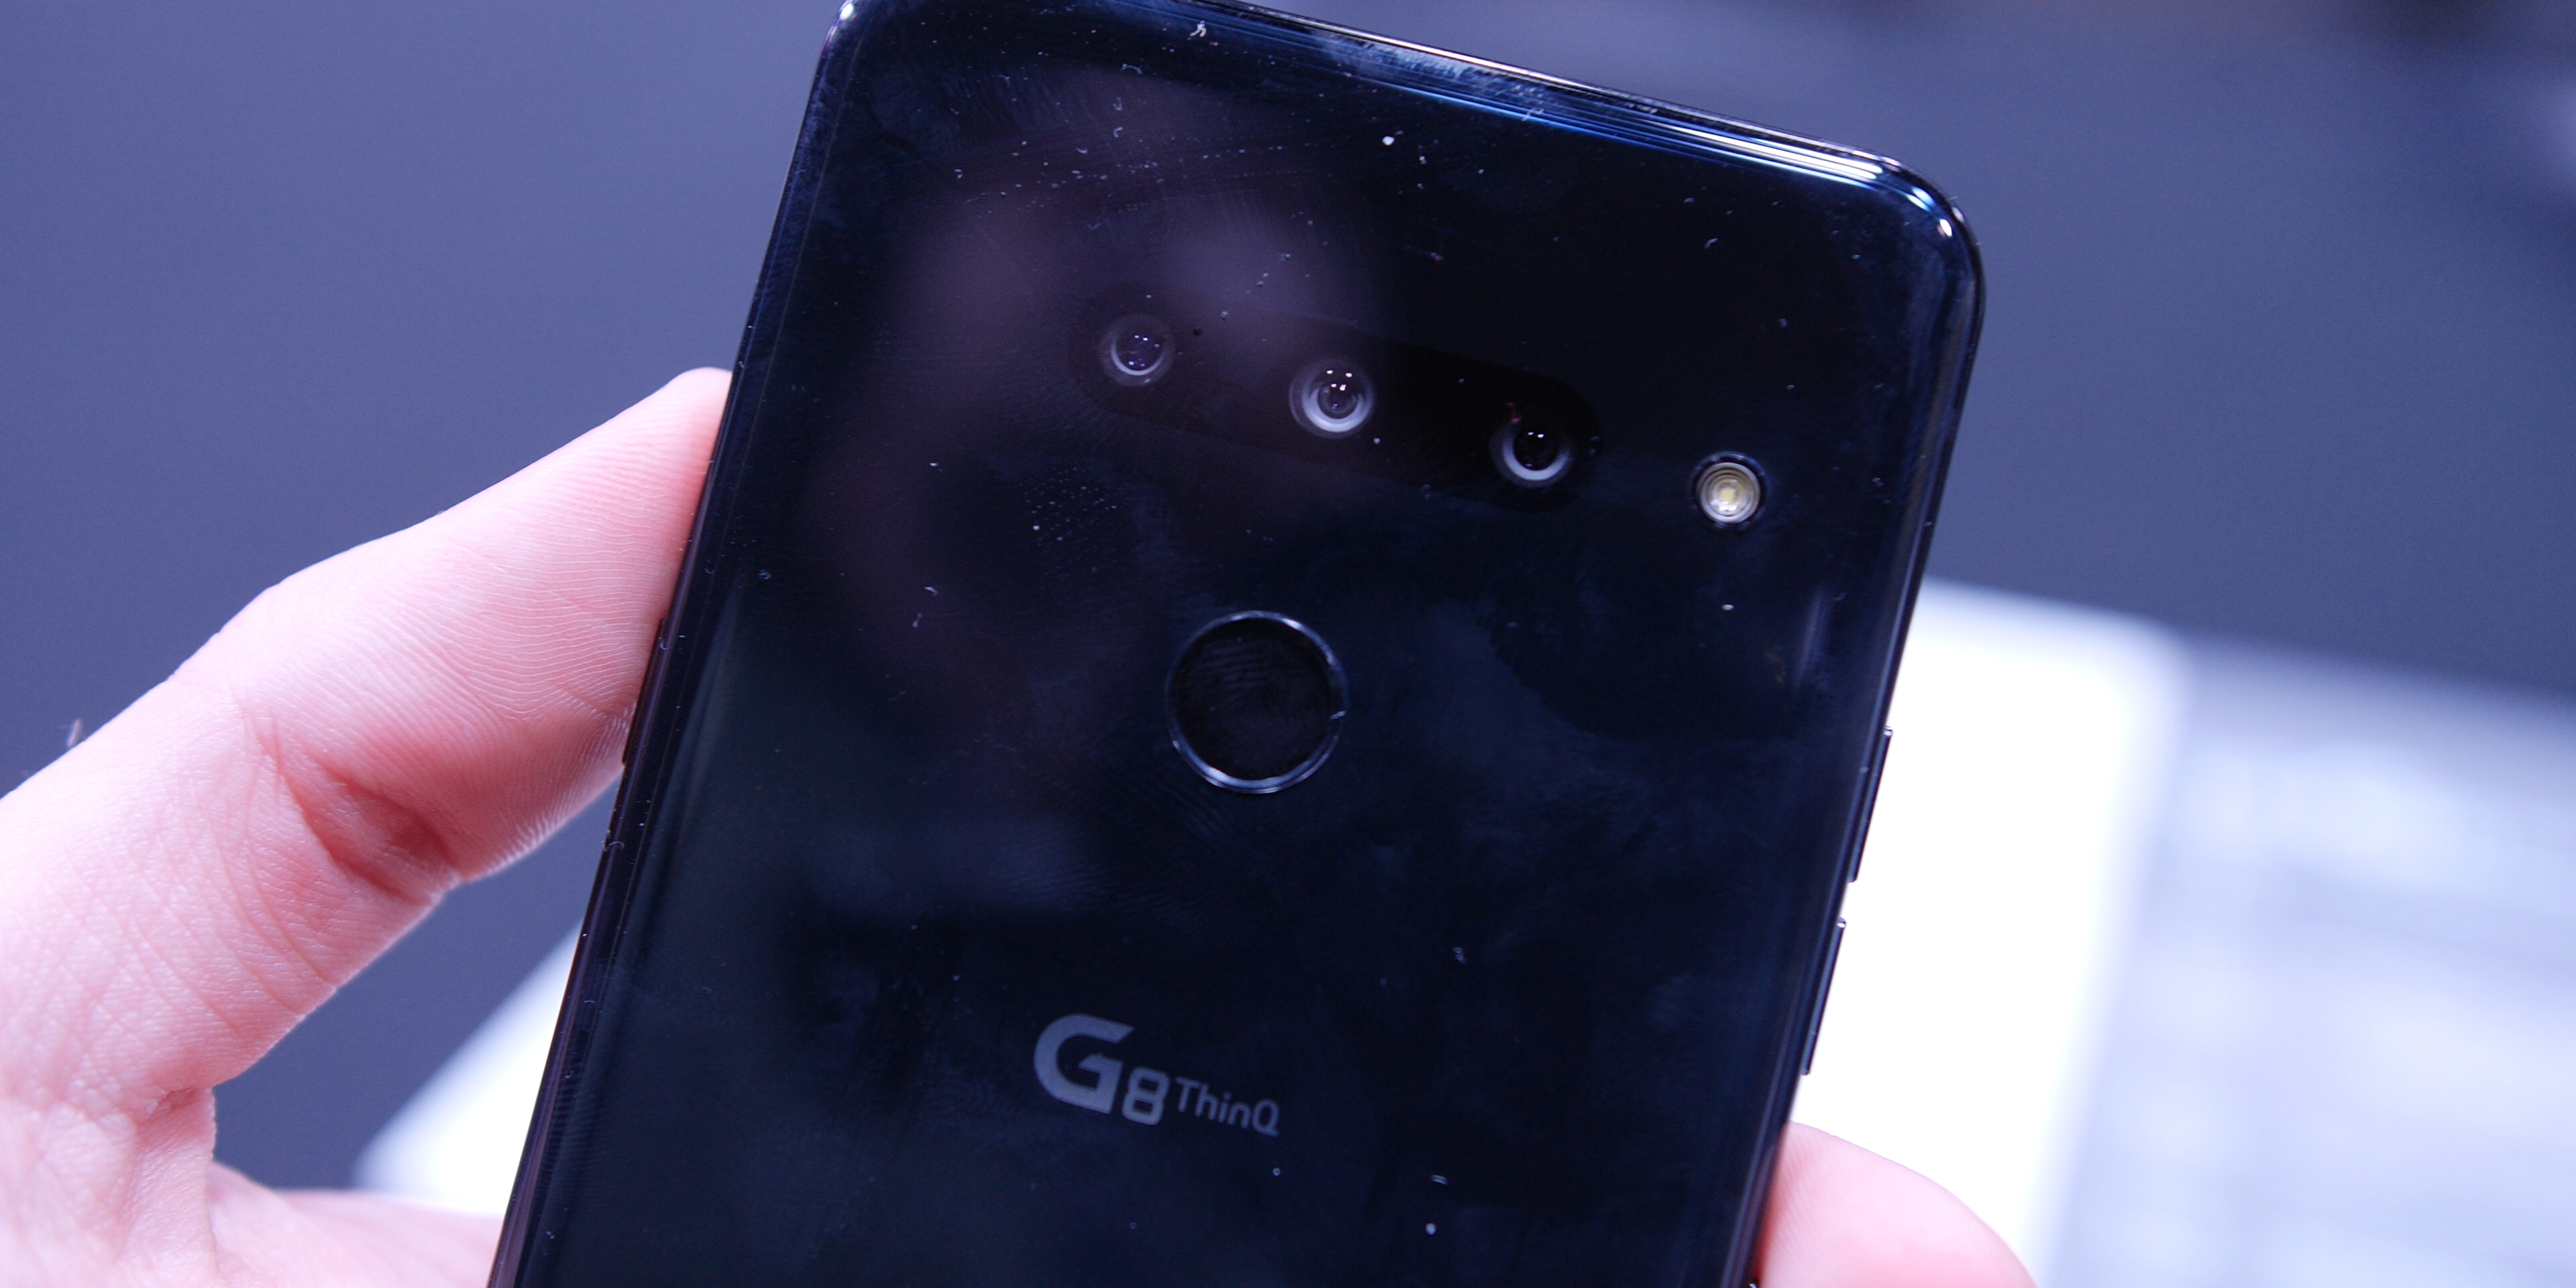 LG G8 ThinQ camera